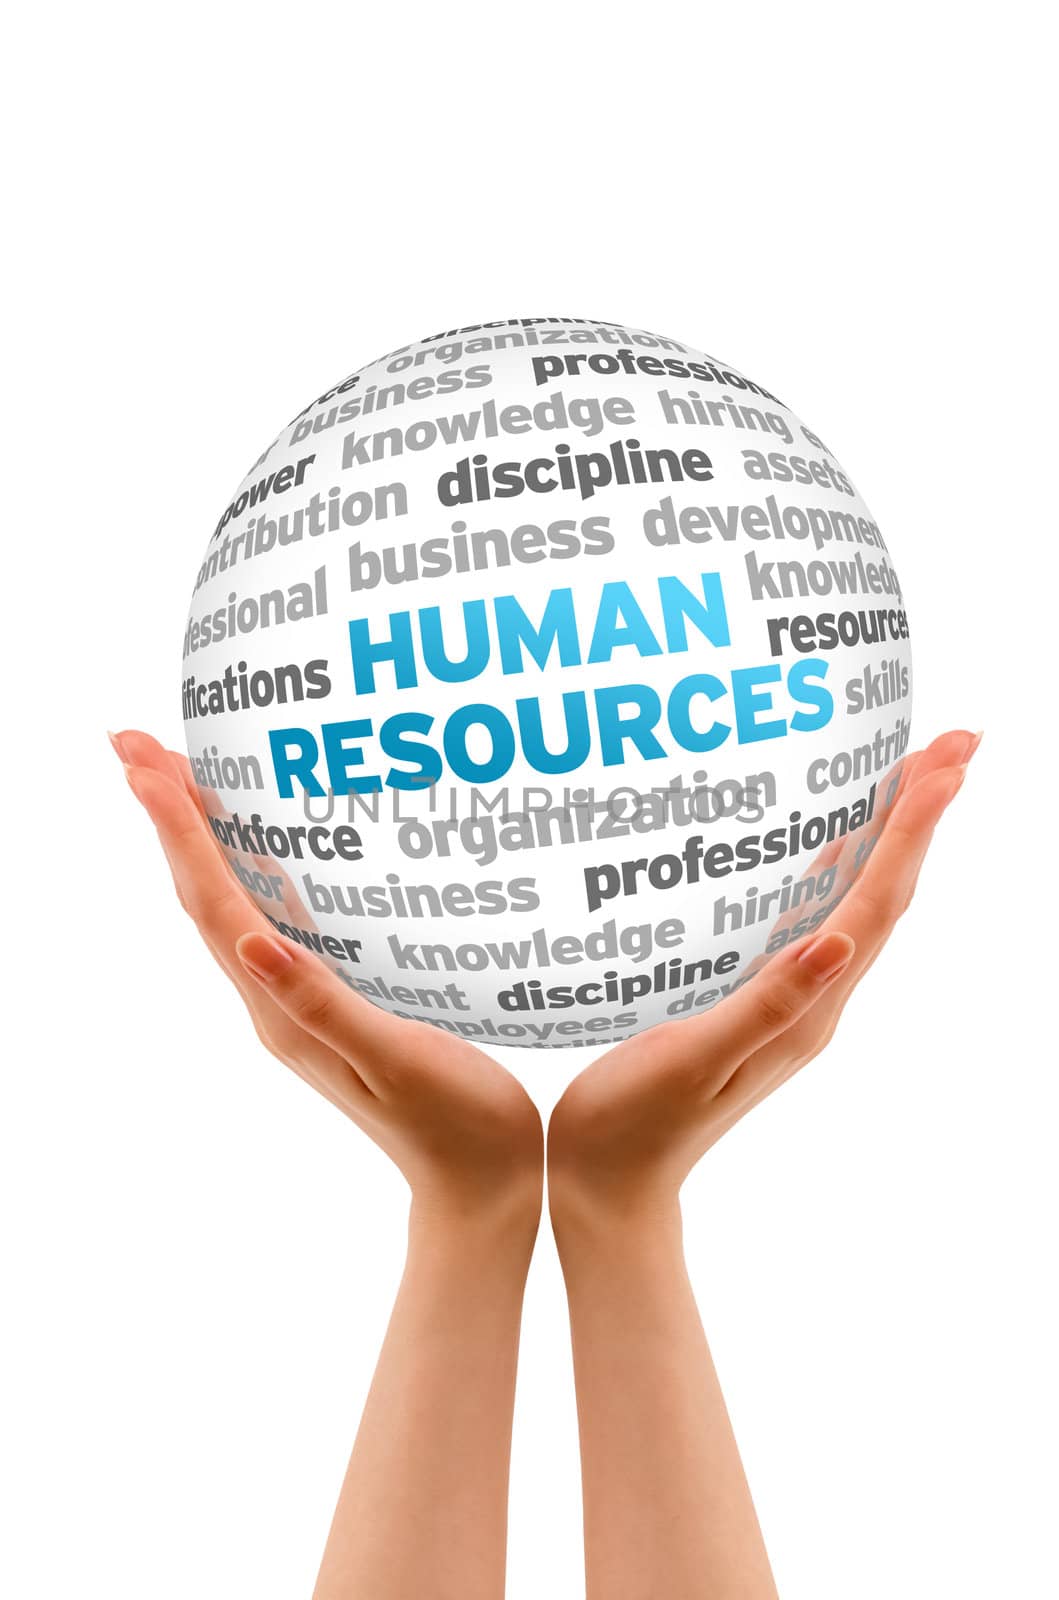 Human Resources by kbuntu